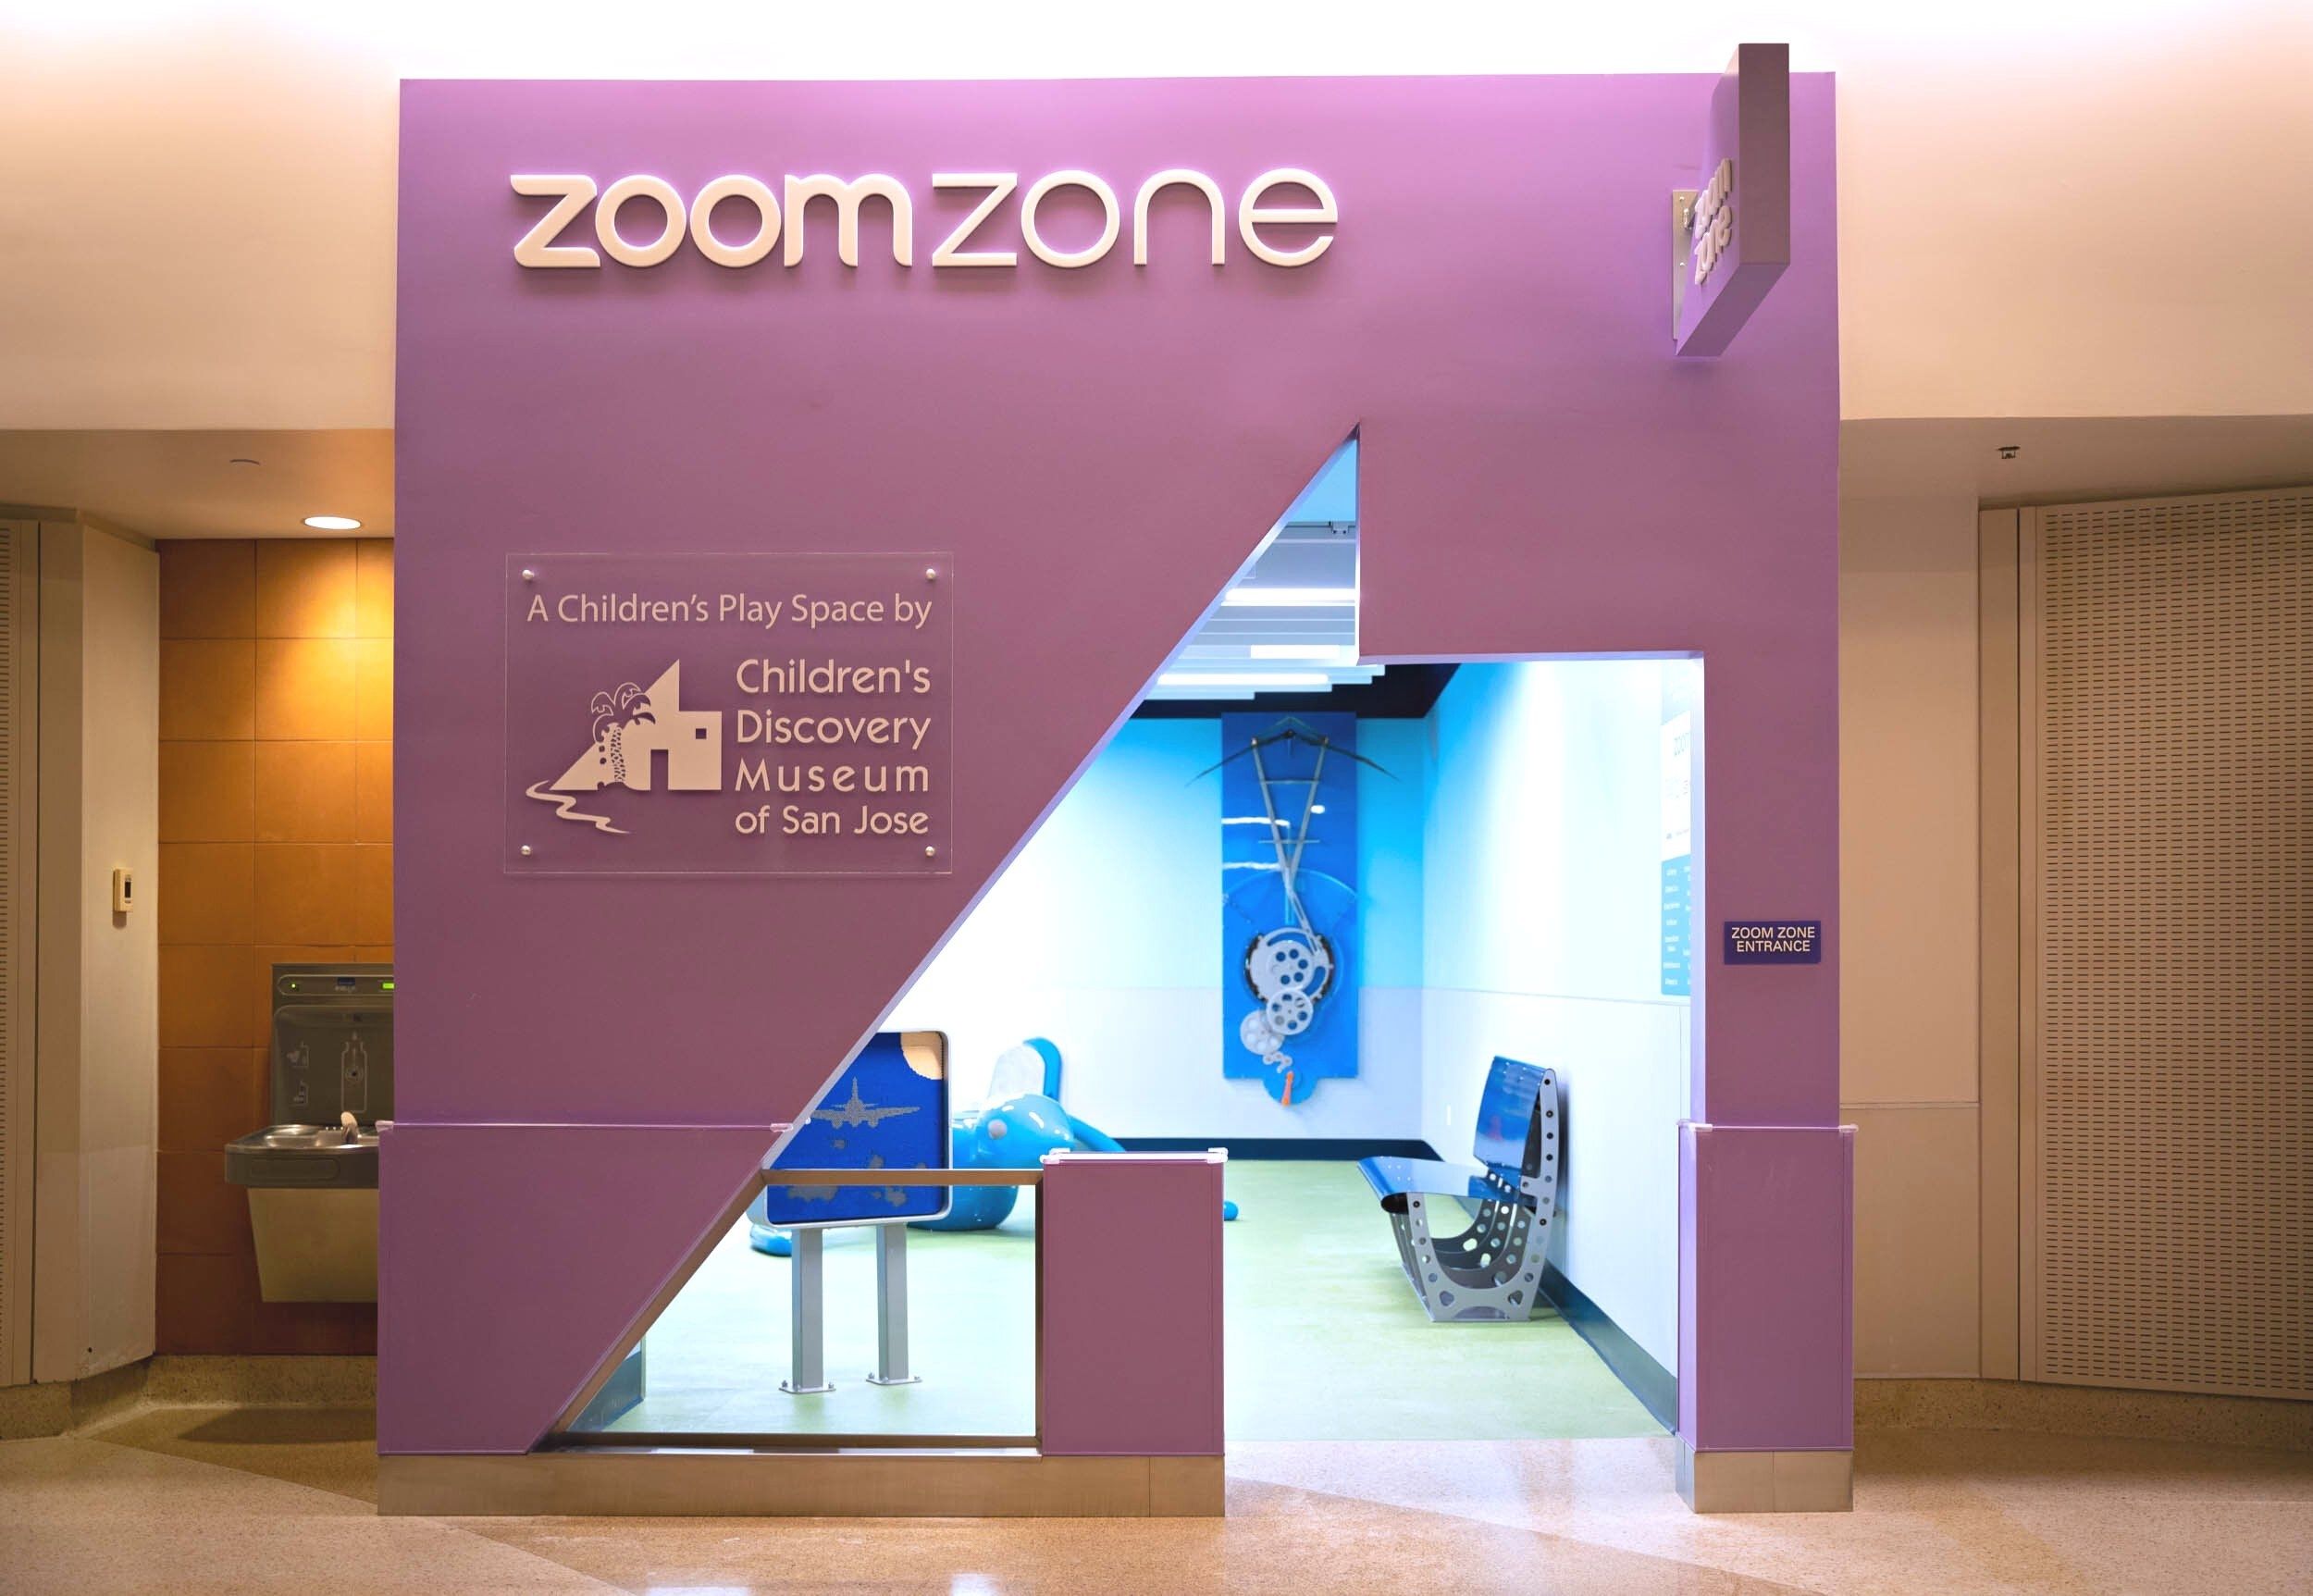 Image of Zoom Zone